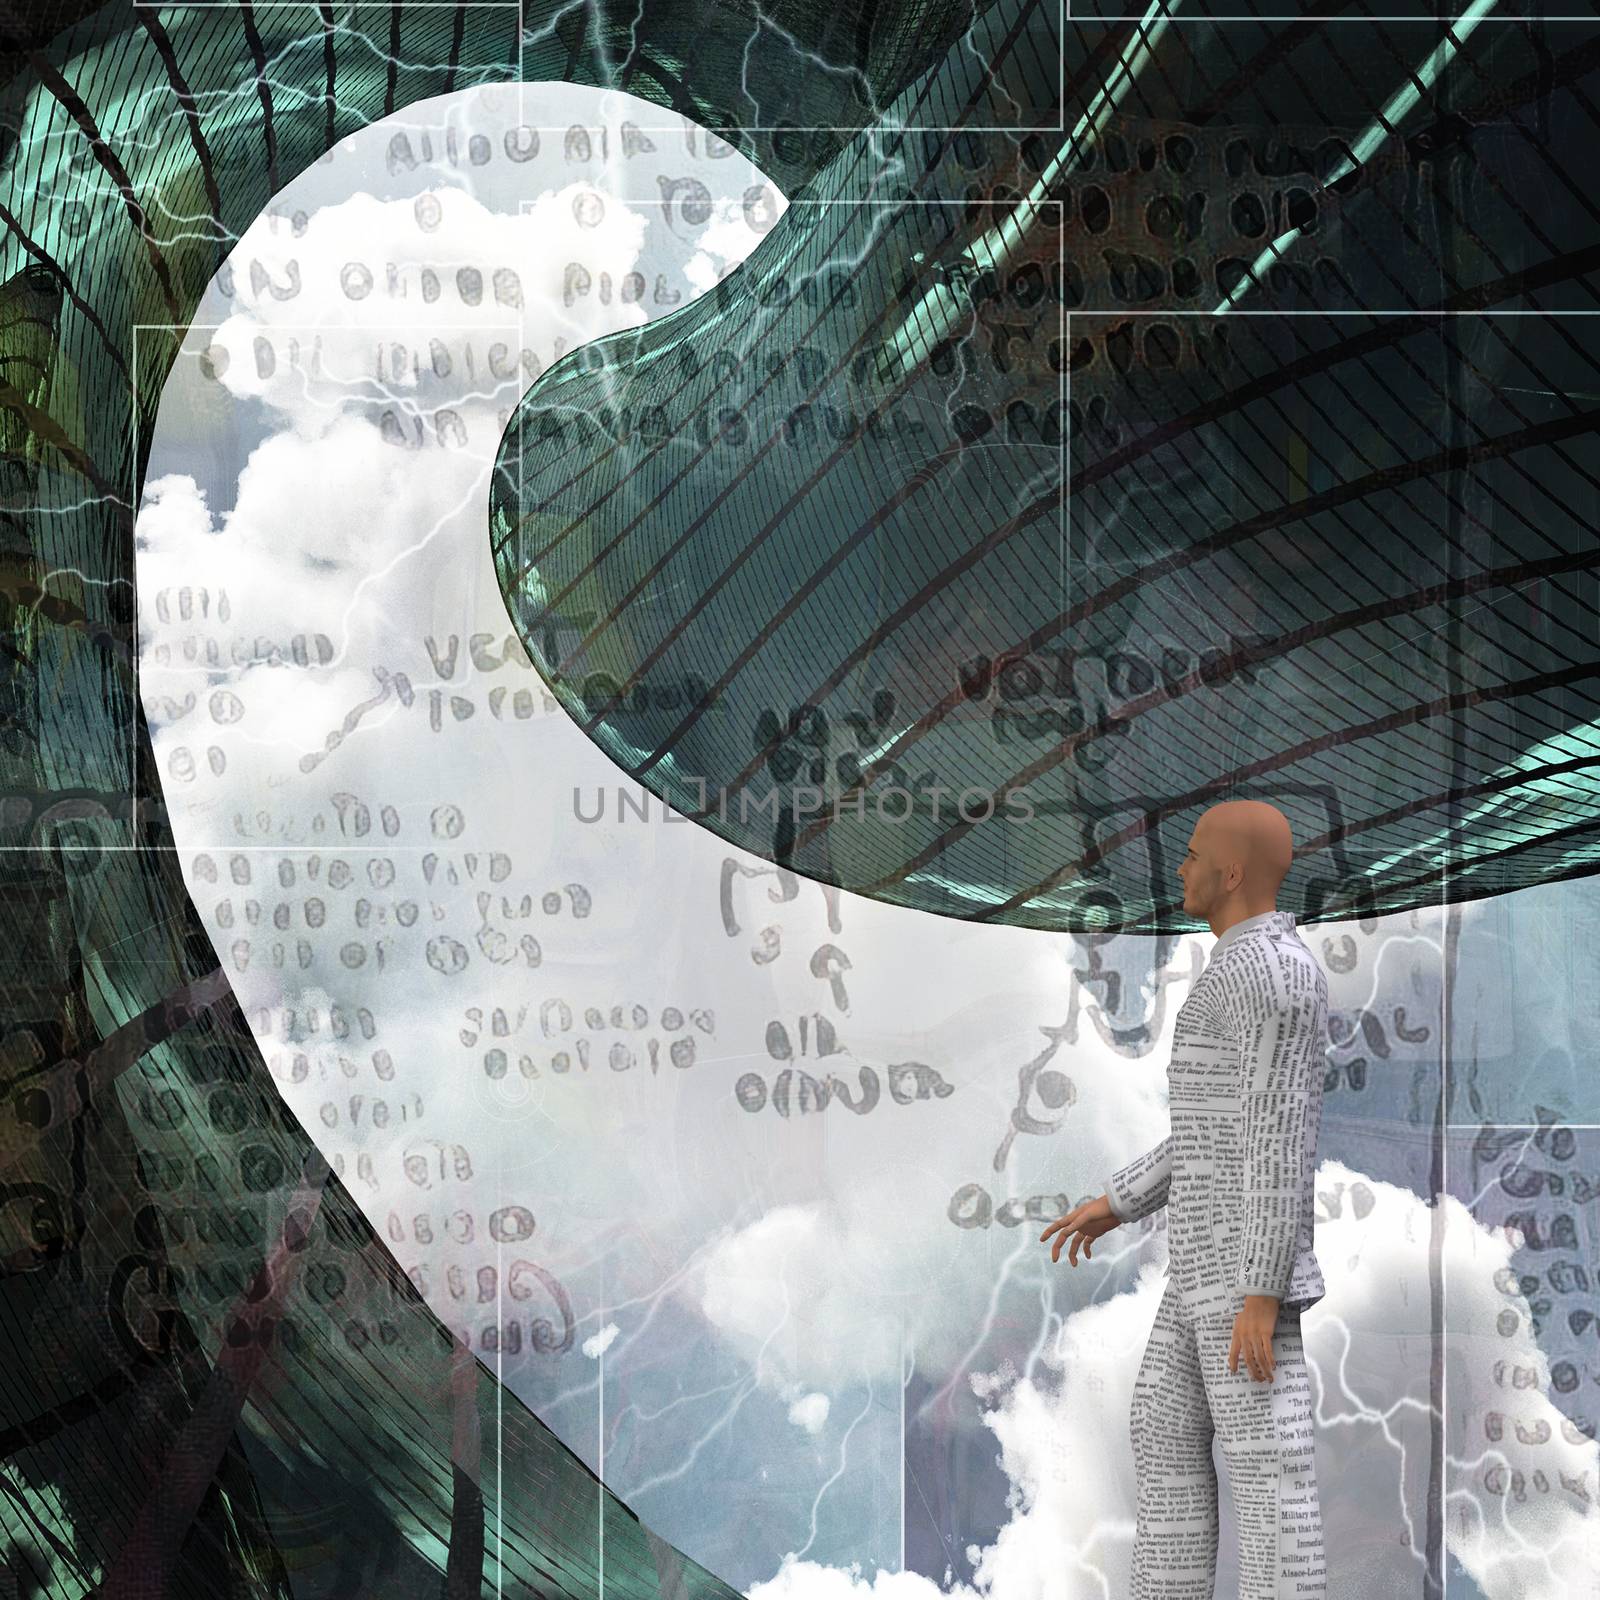 Futuristic architecture, mystic symbols and man in newspaper suit. 3D rendering